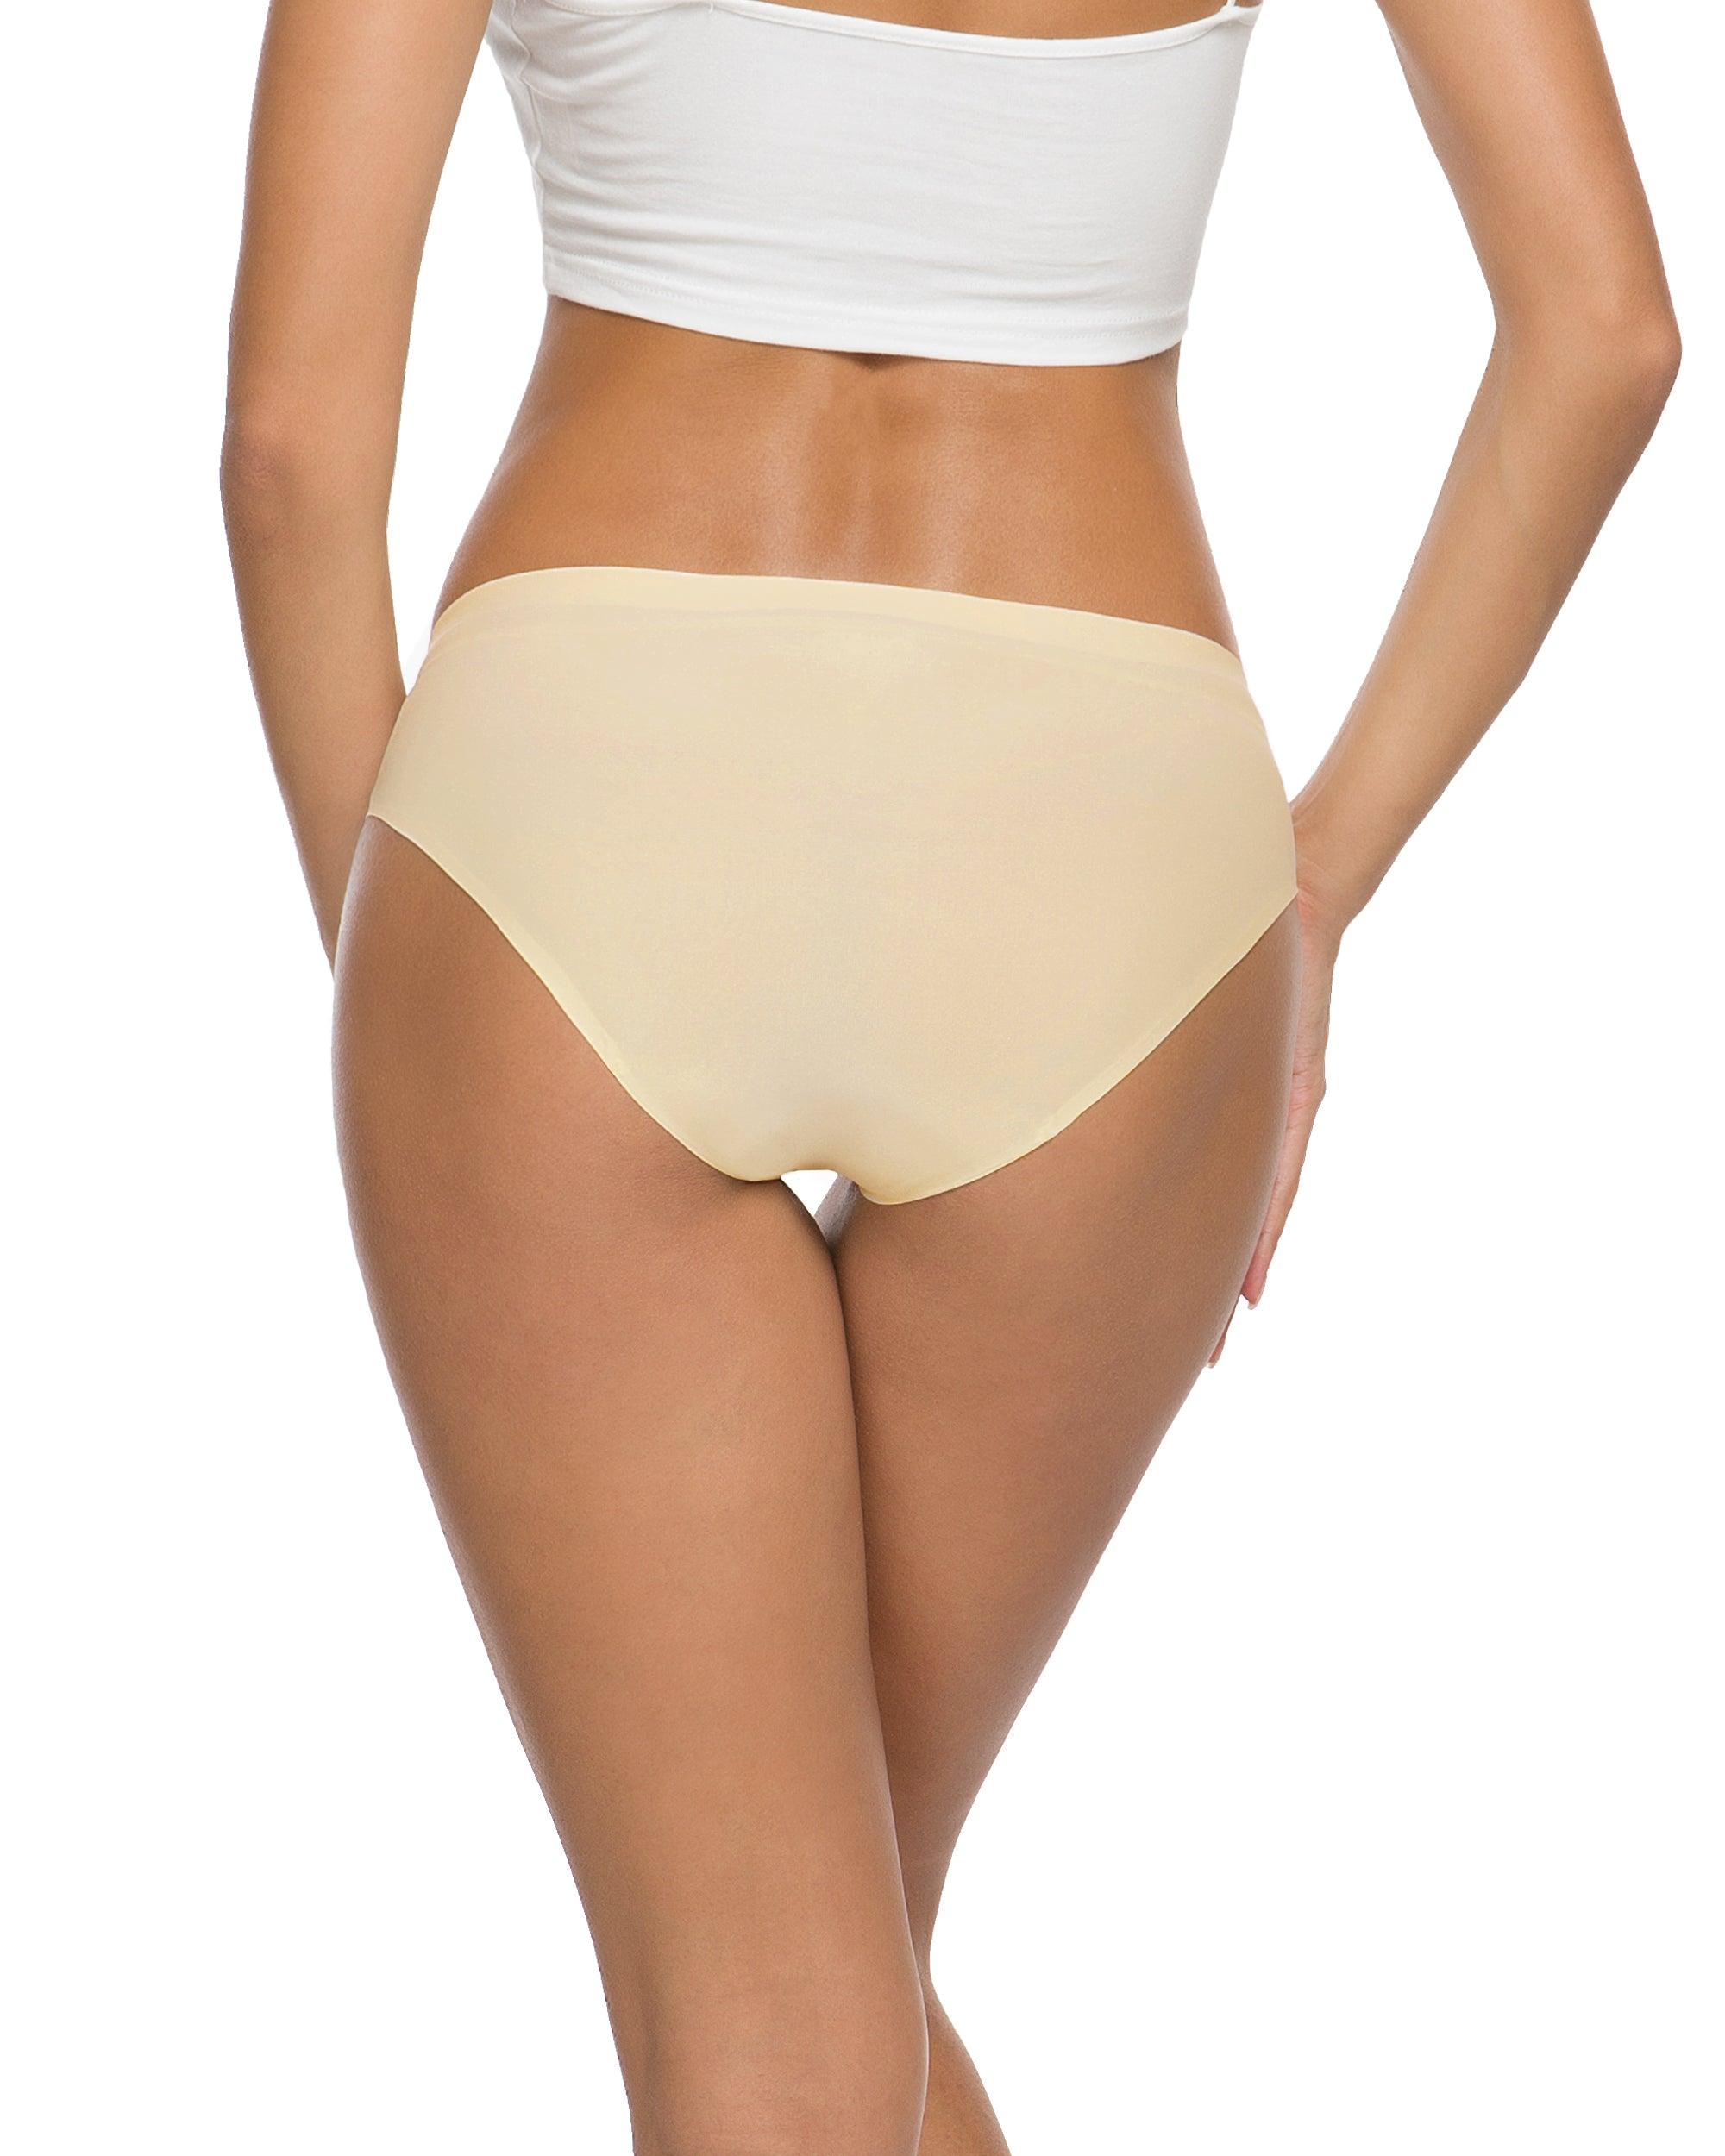 ADAGRO Women's Underwear Microfiber Ribbed No Show Bralette (Color